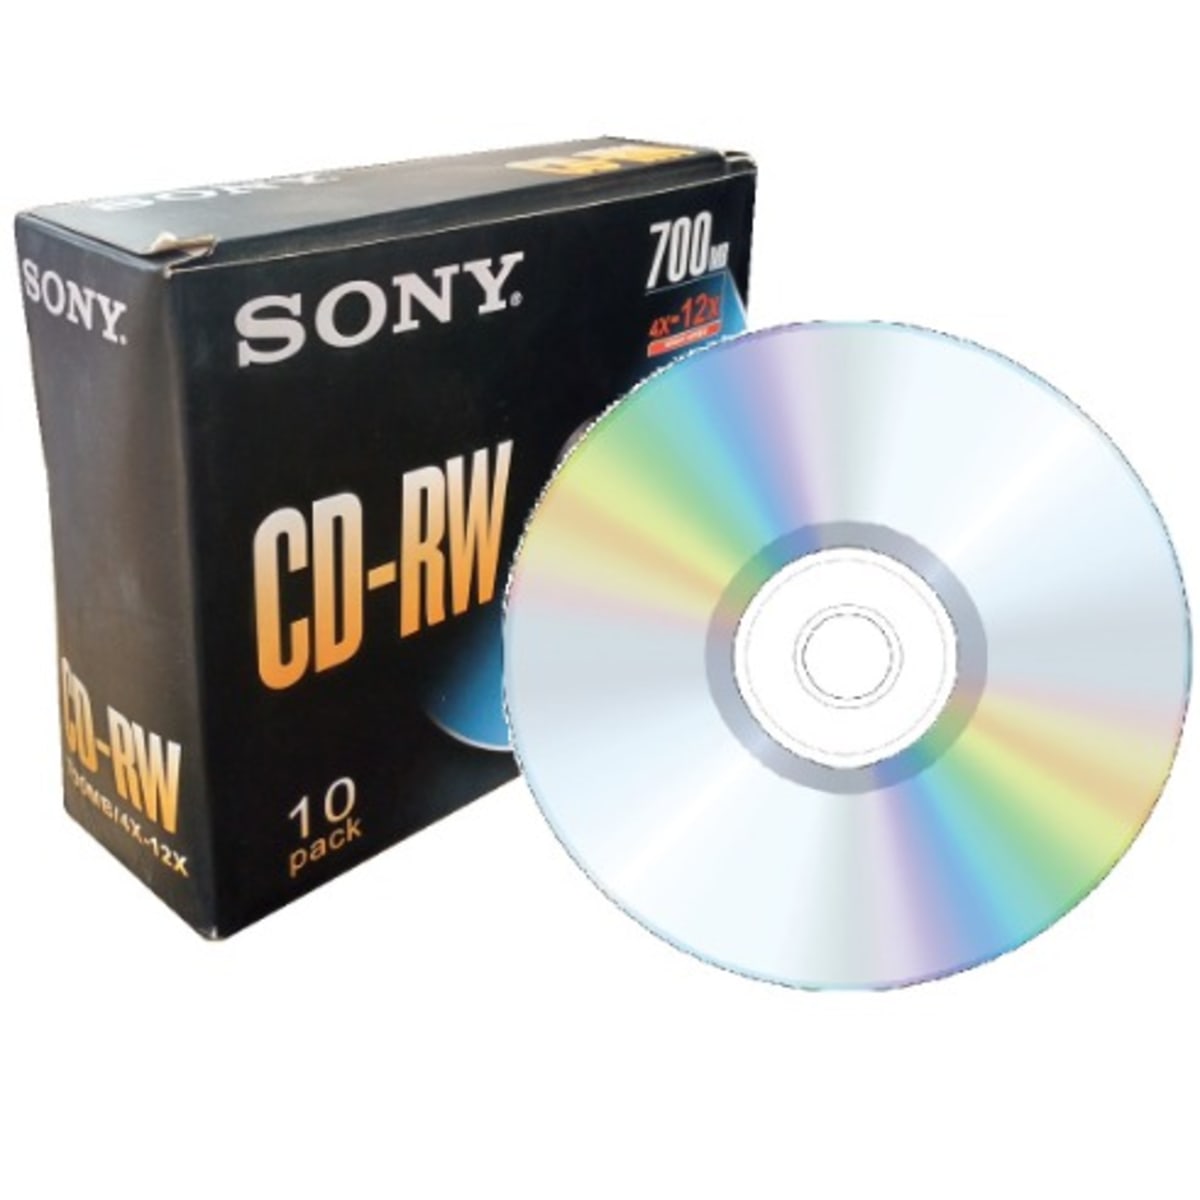 CD Rewritable CD-RW 700MB 80 Minute